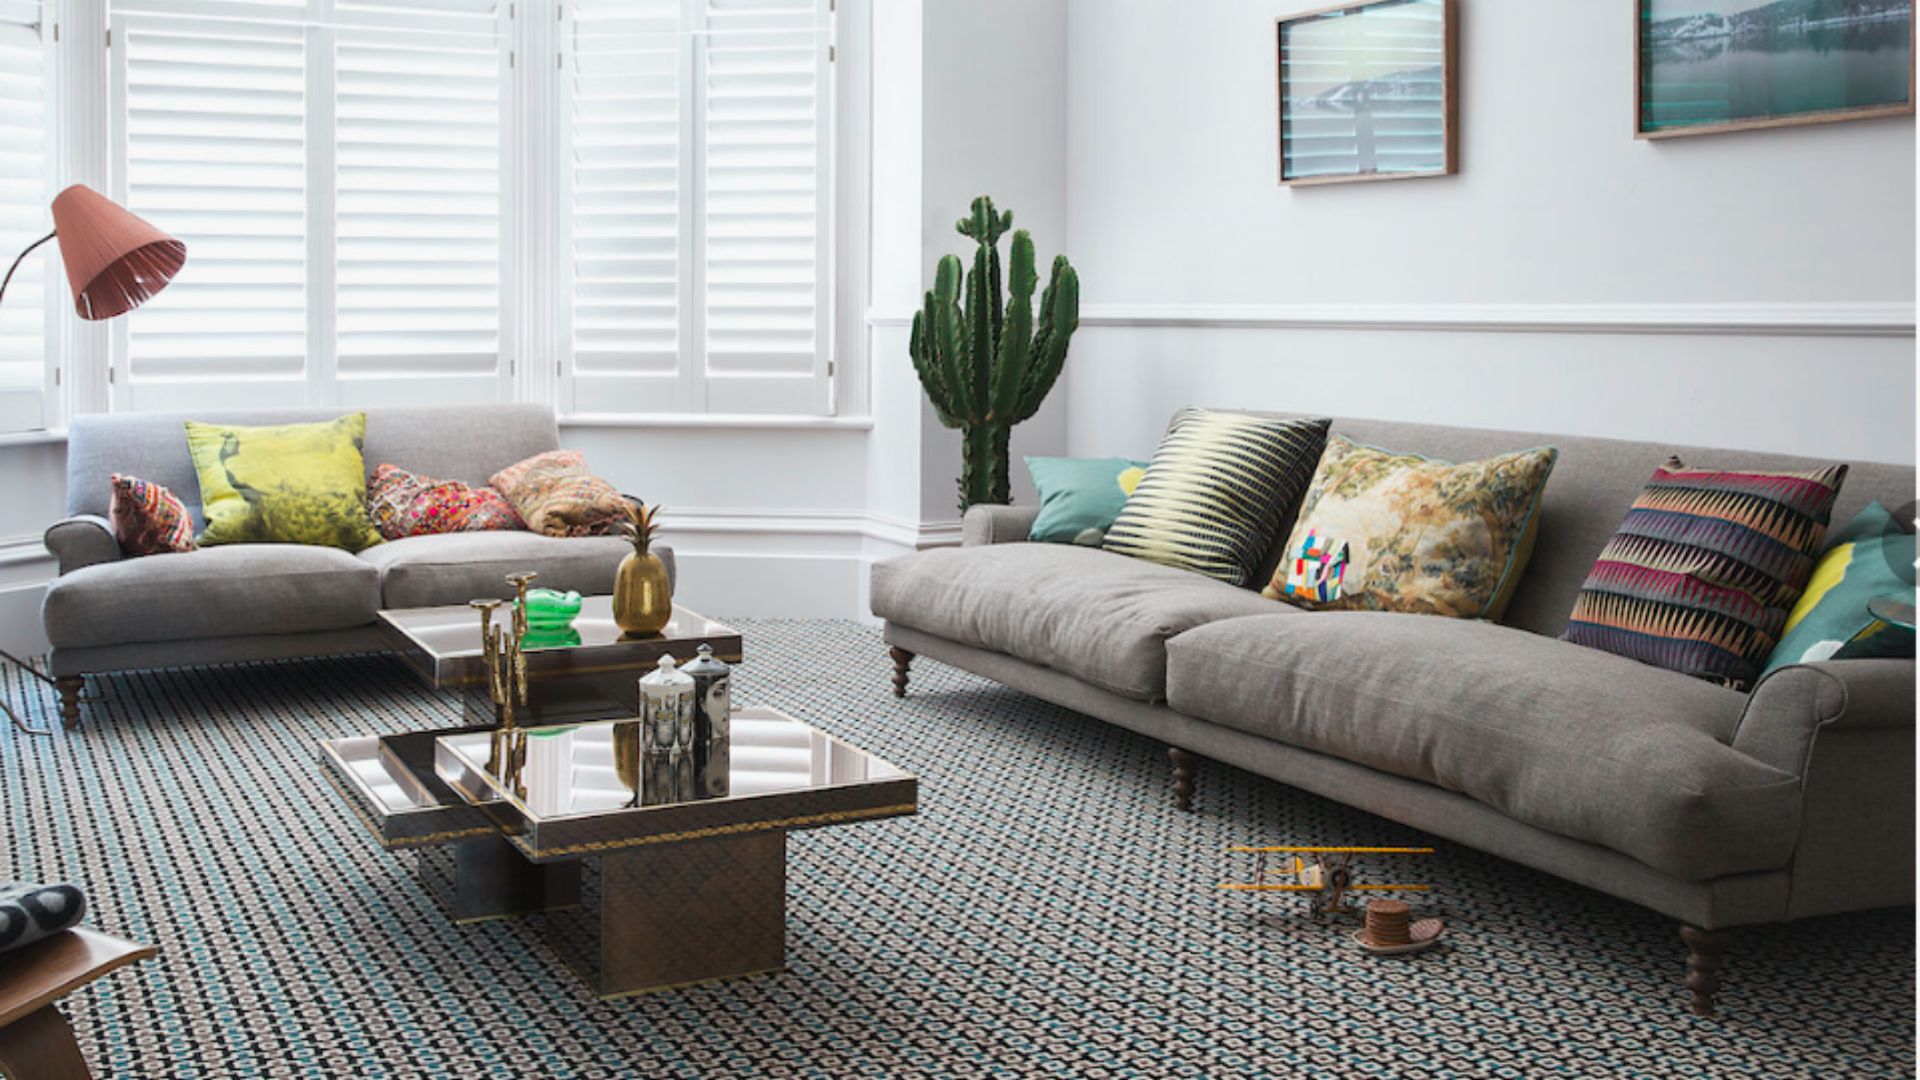  Creative Ways to Use Floor Carpets in Interior Design